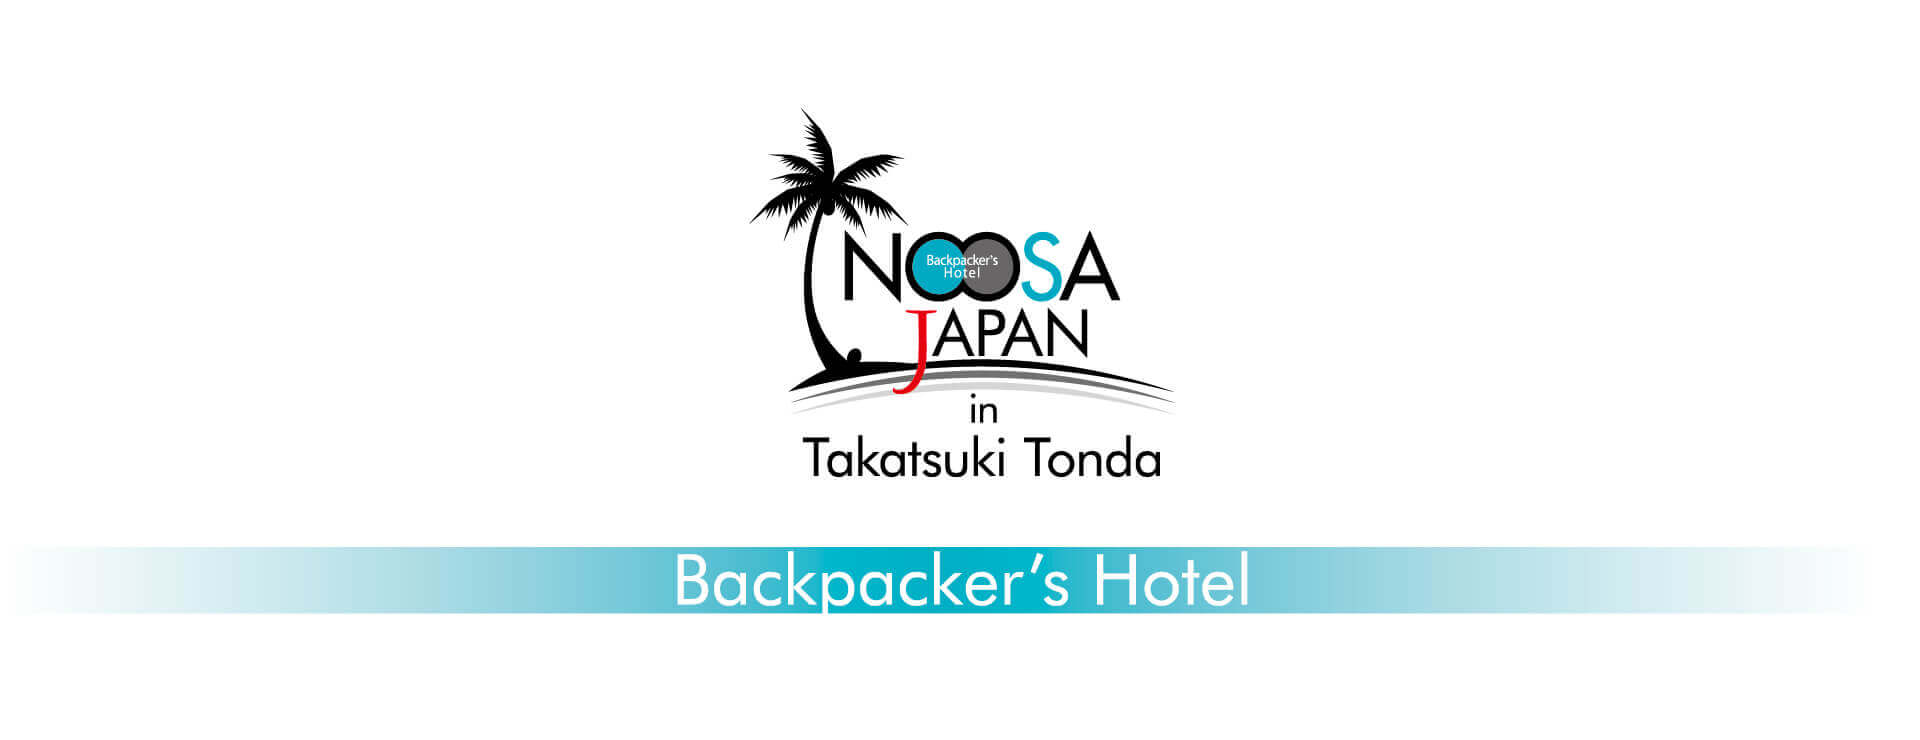 Backpacker's Hotel NOOSA JAPAN in Takatsuki Tonda